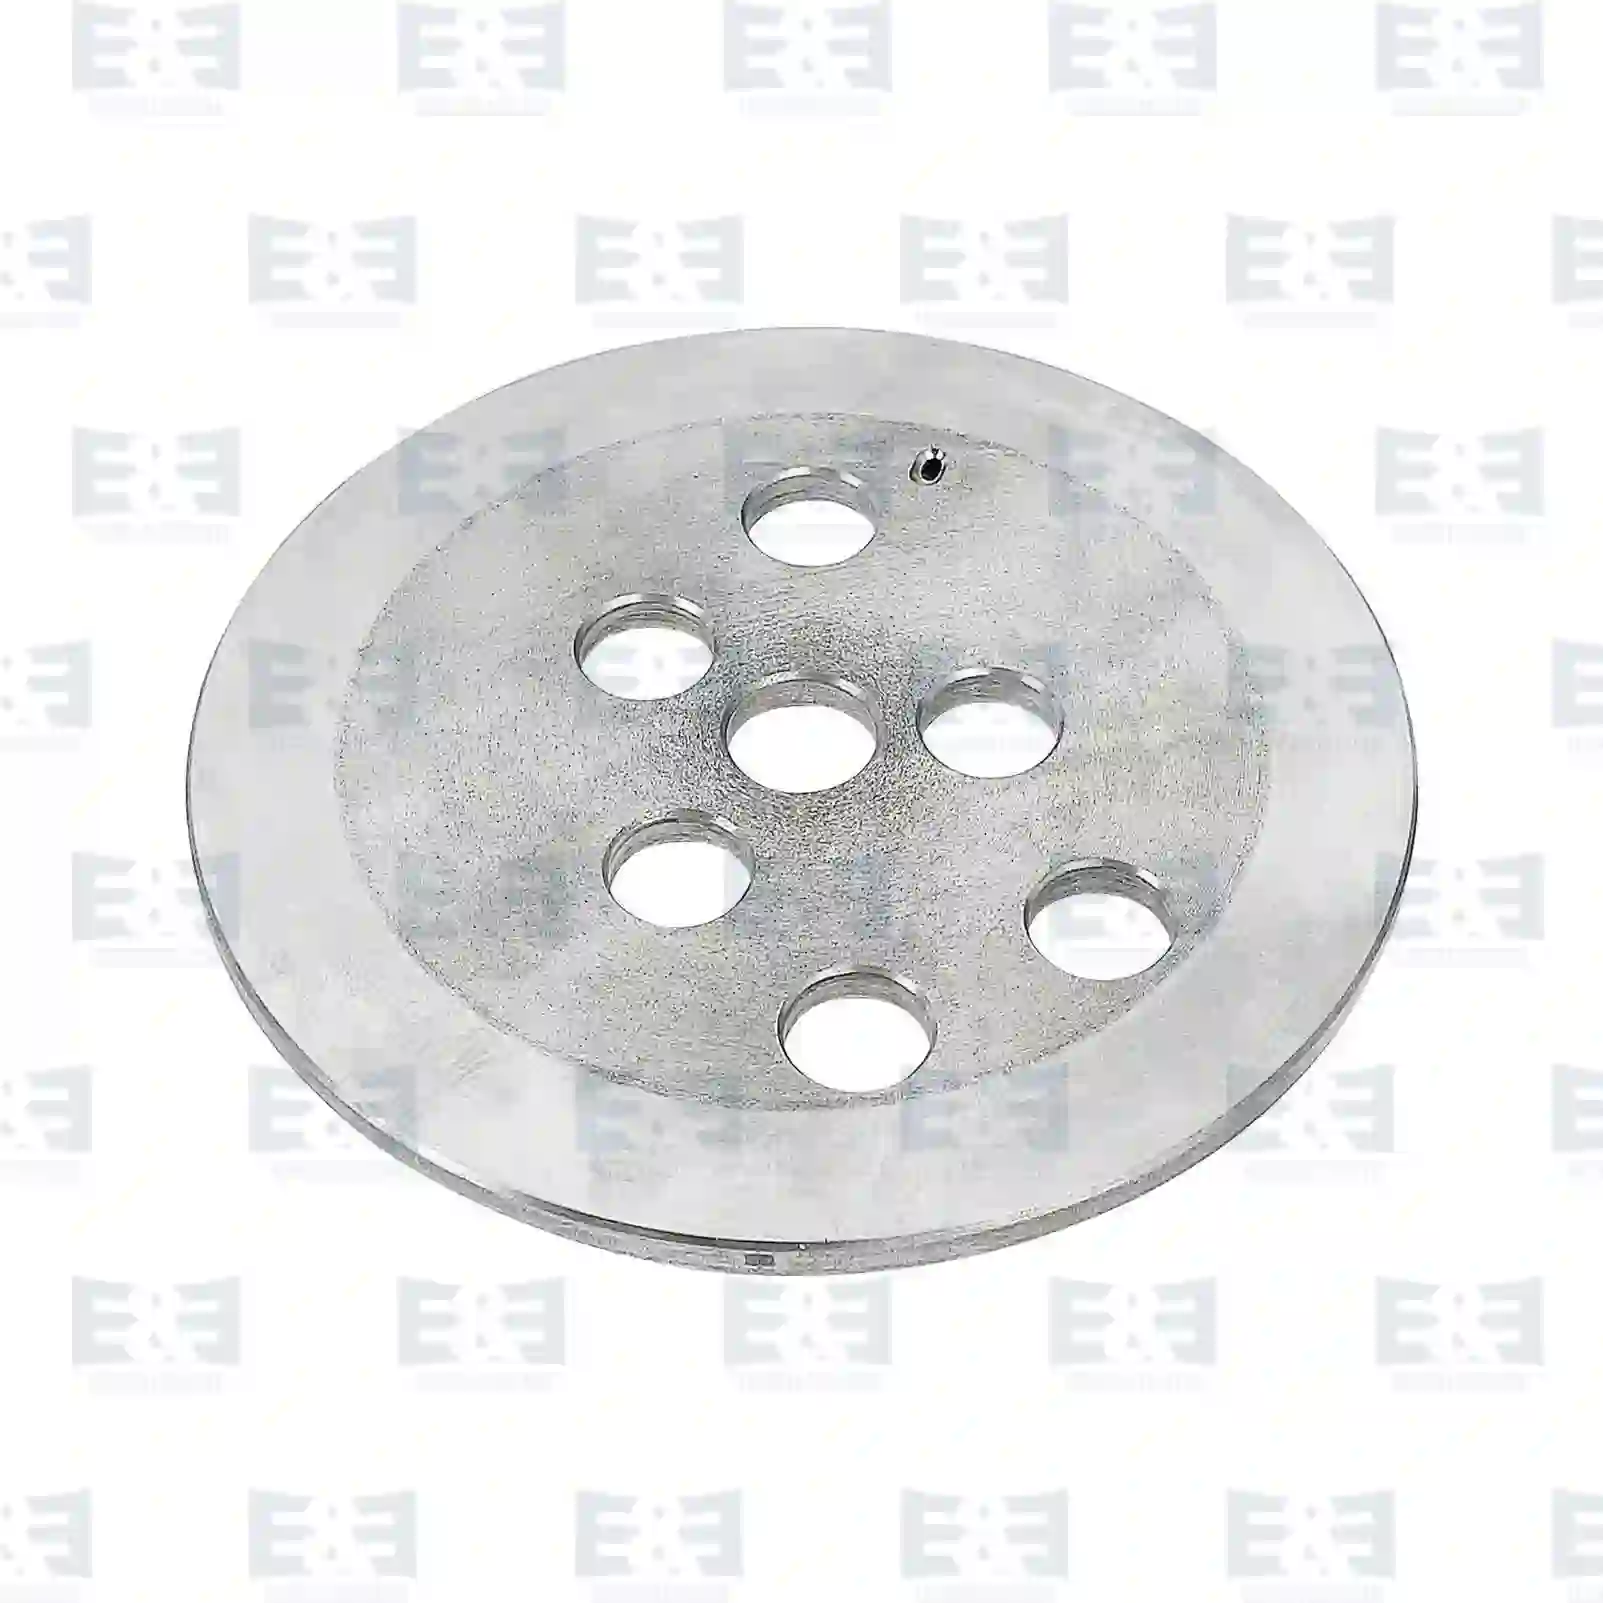  Bearing shield || E&E Truck Spare Parts | Truck Spare Parts, Auotomotive Spare Parts